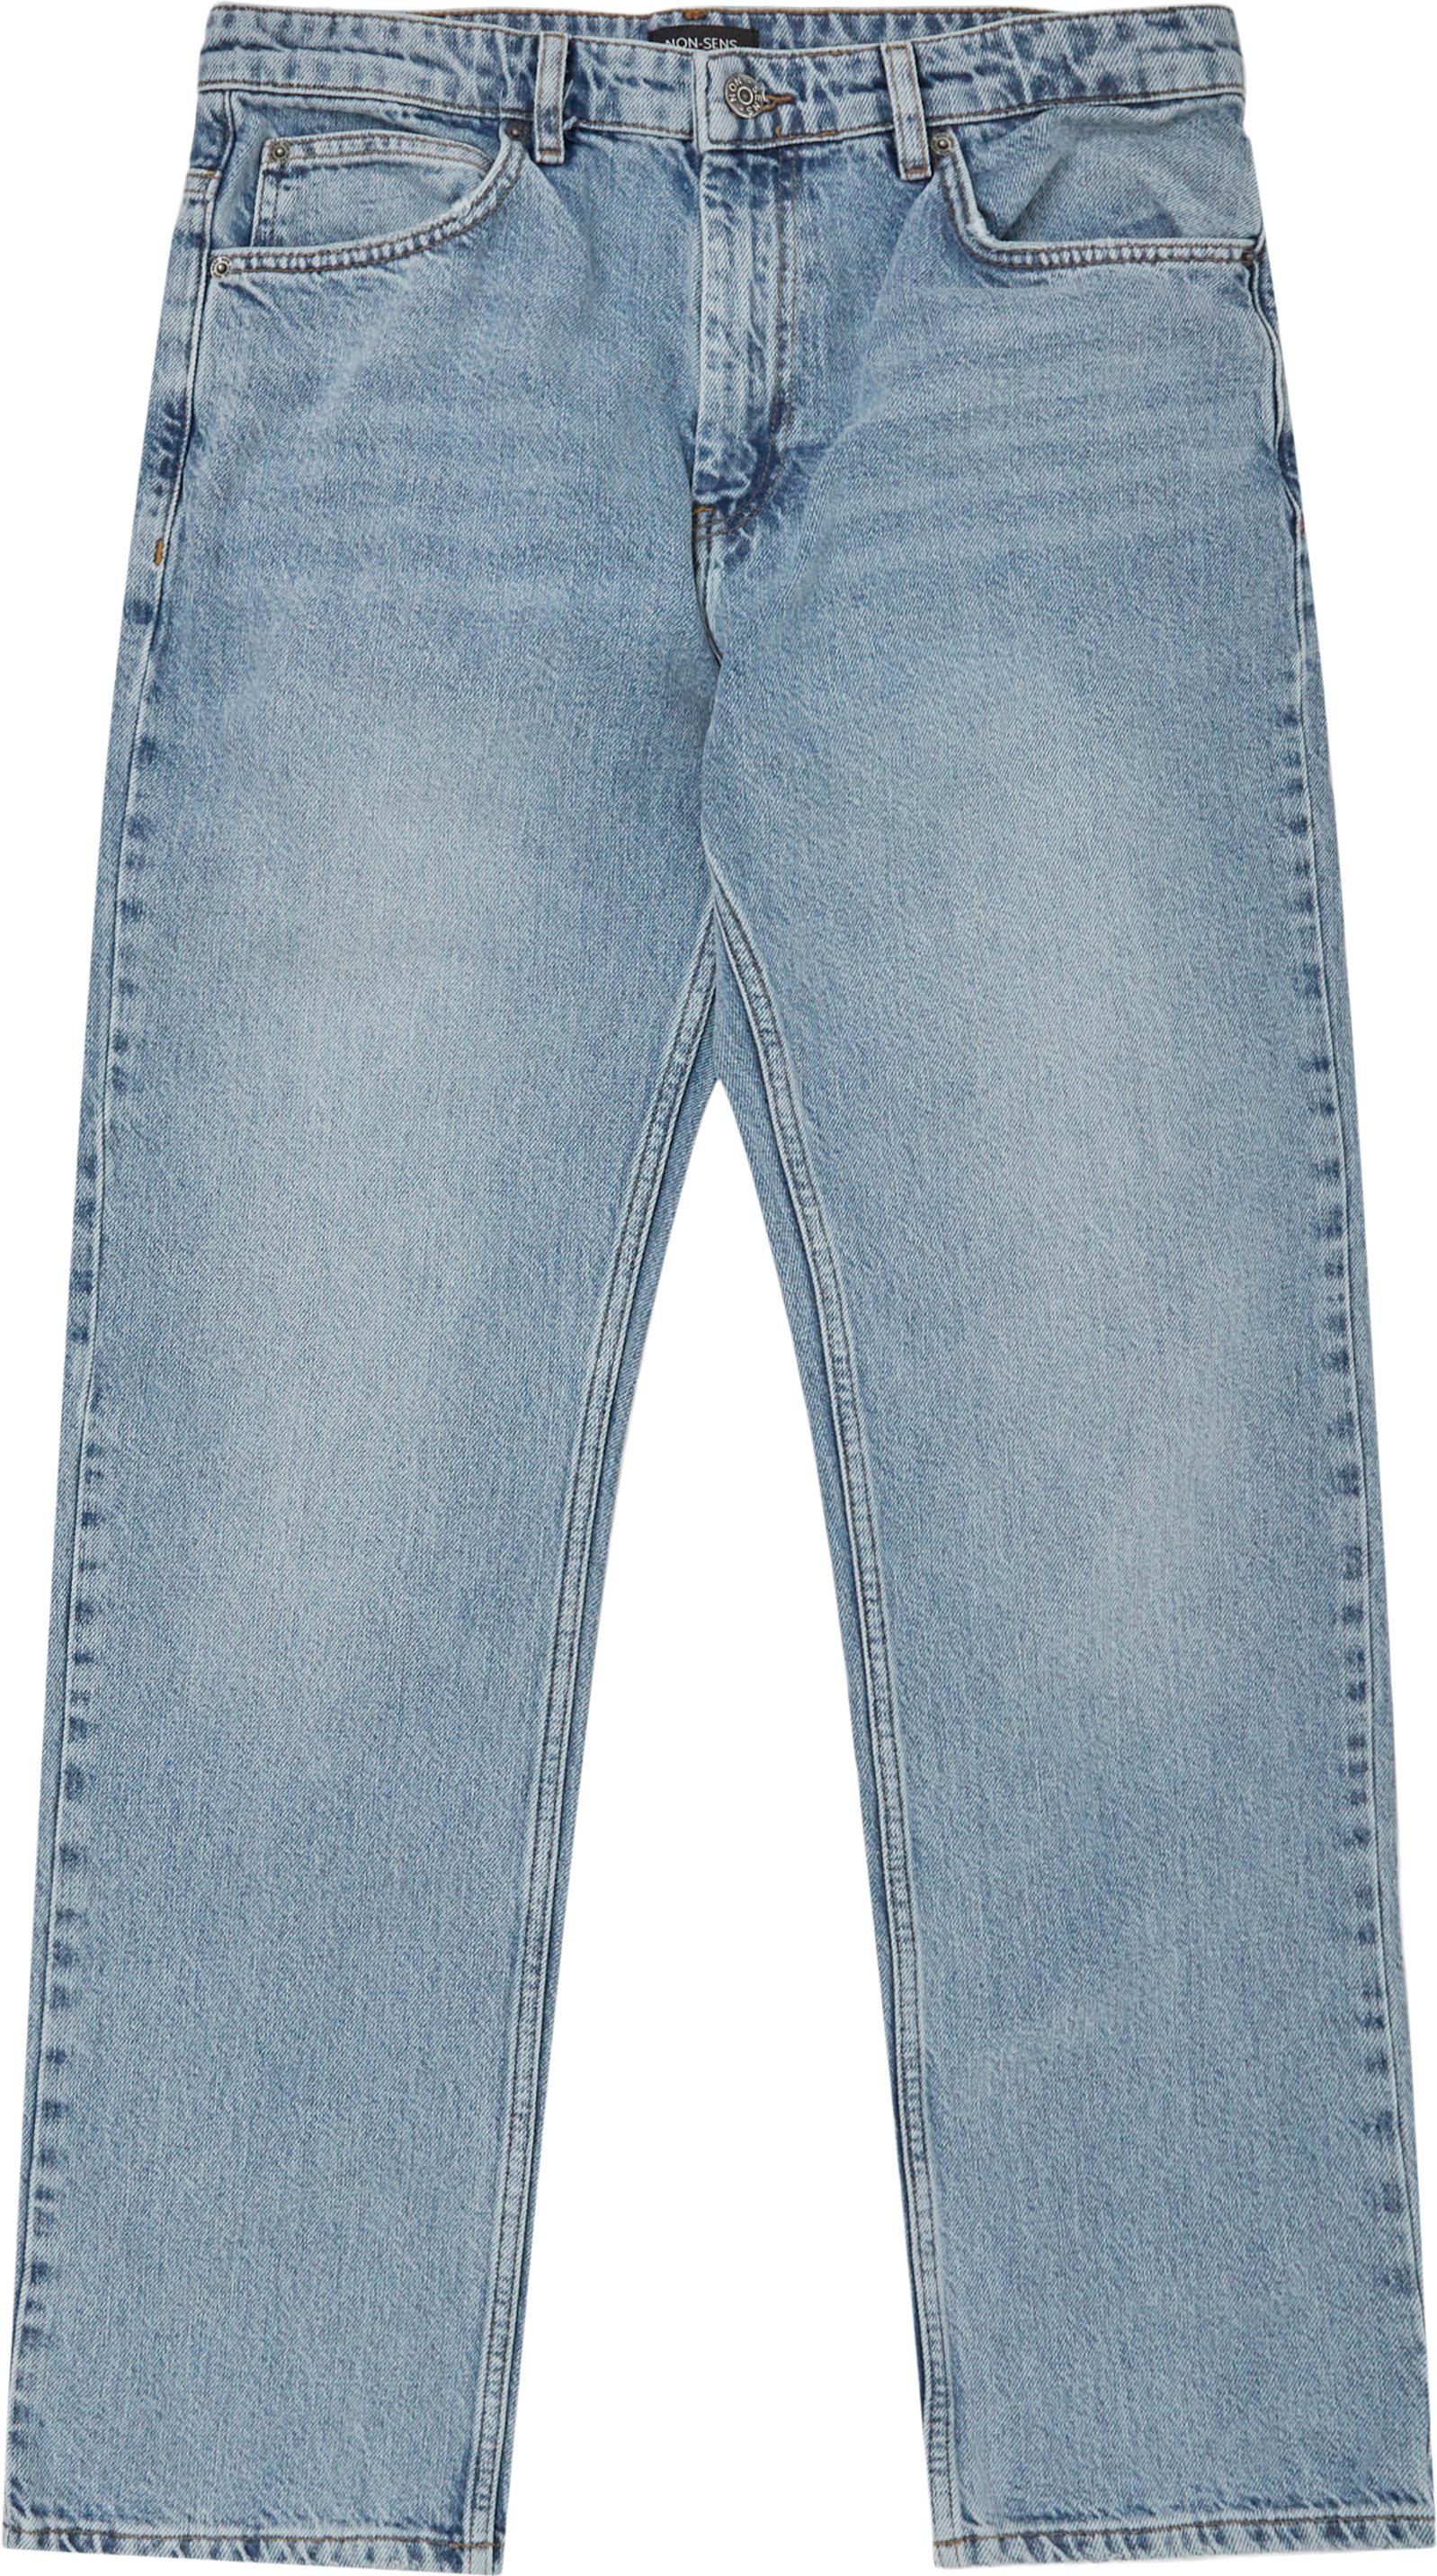 Vermont Light Stone Jeans - Jeans - Straight fit - Denim